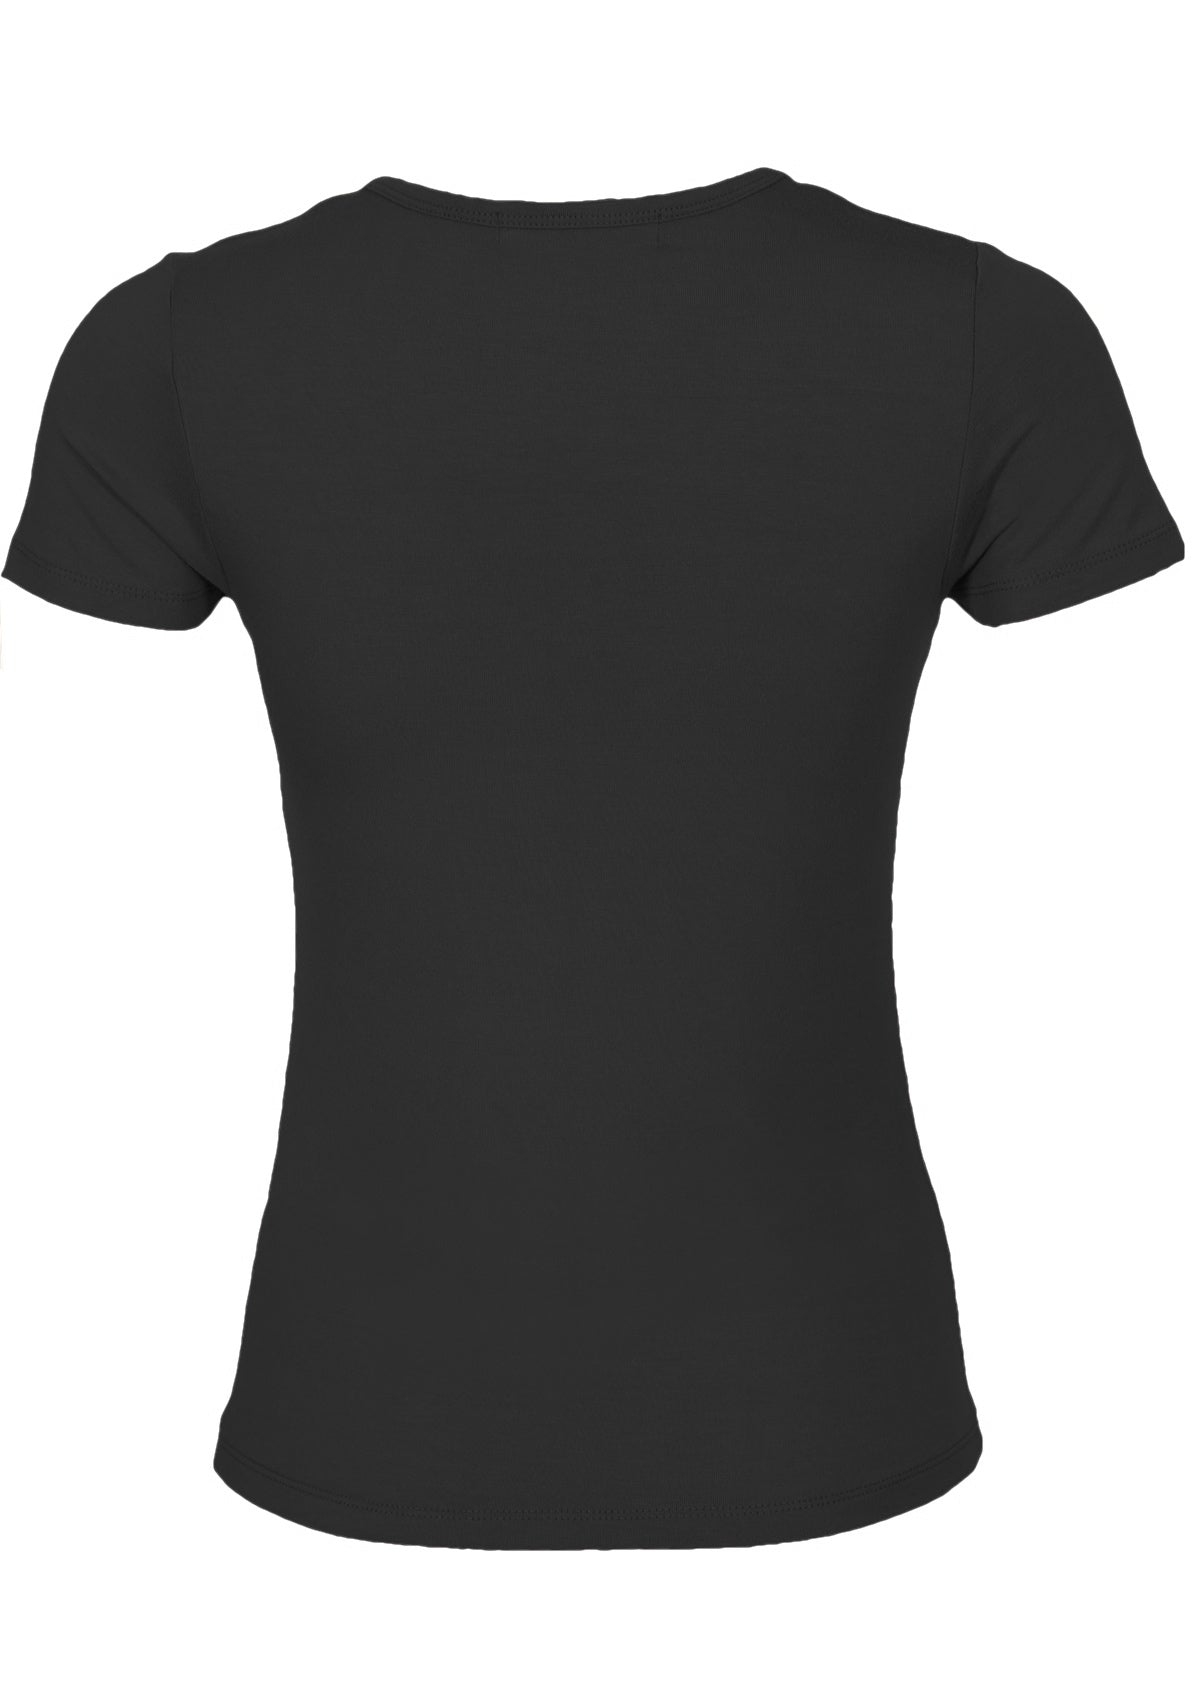 Back view women's black stretch rayon t-shirt.